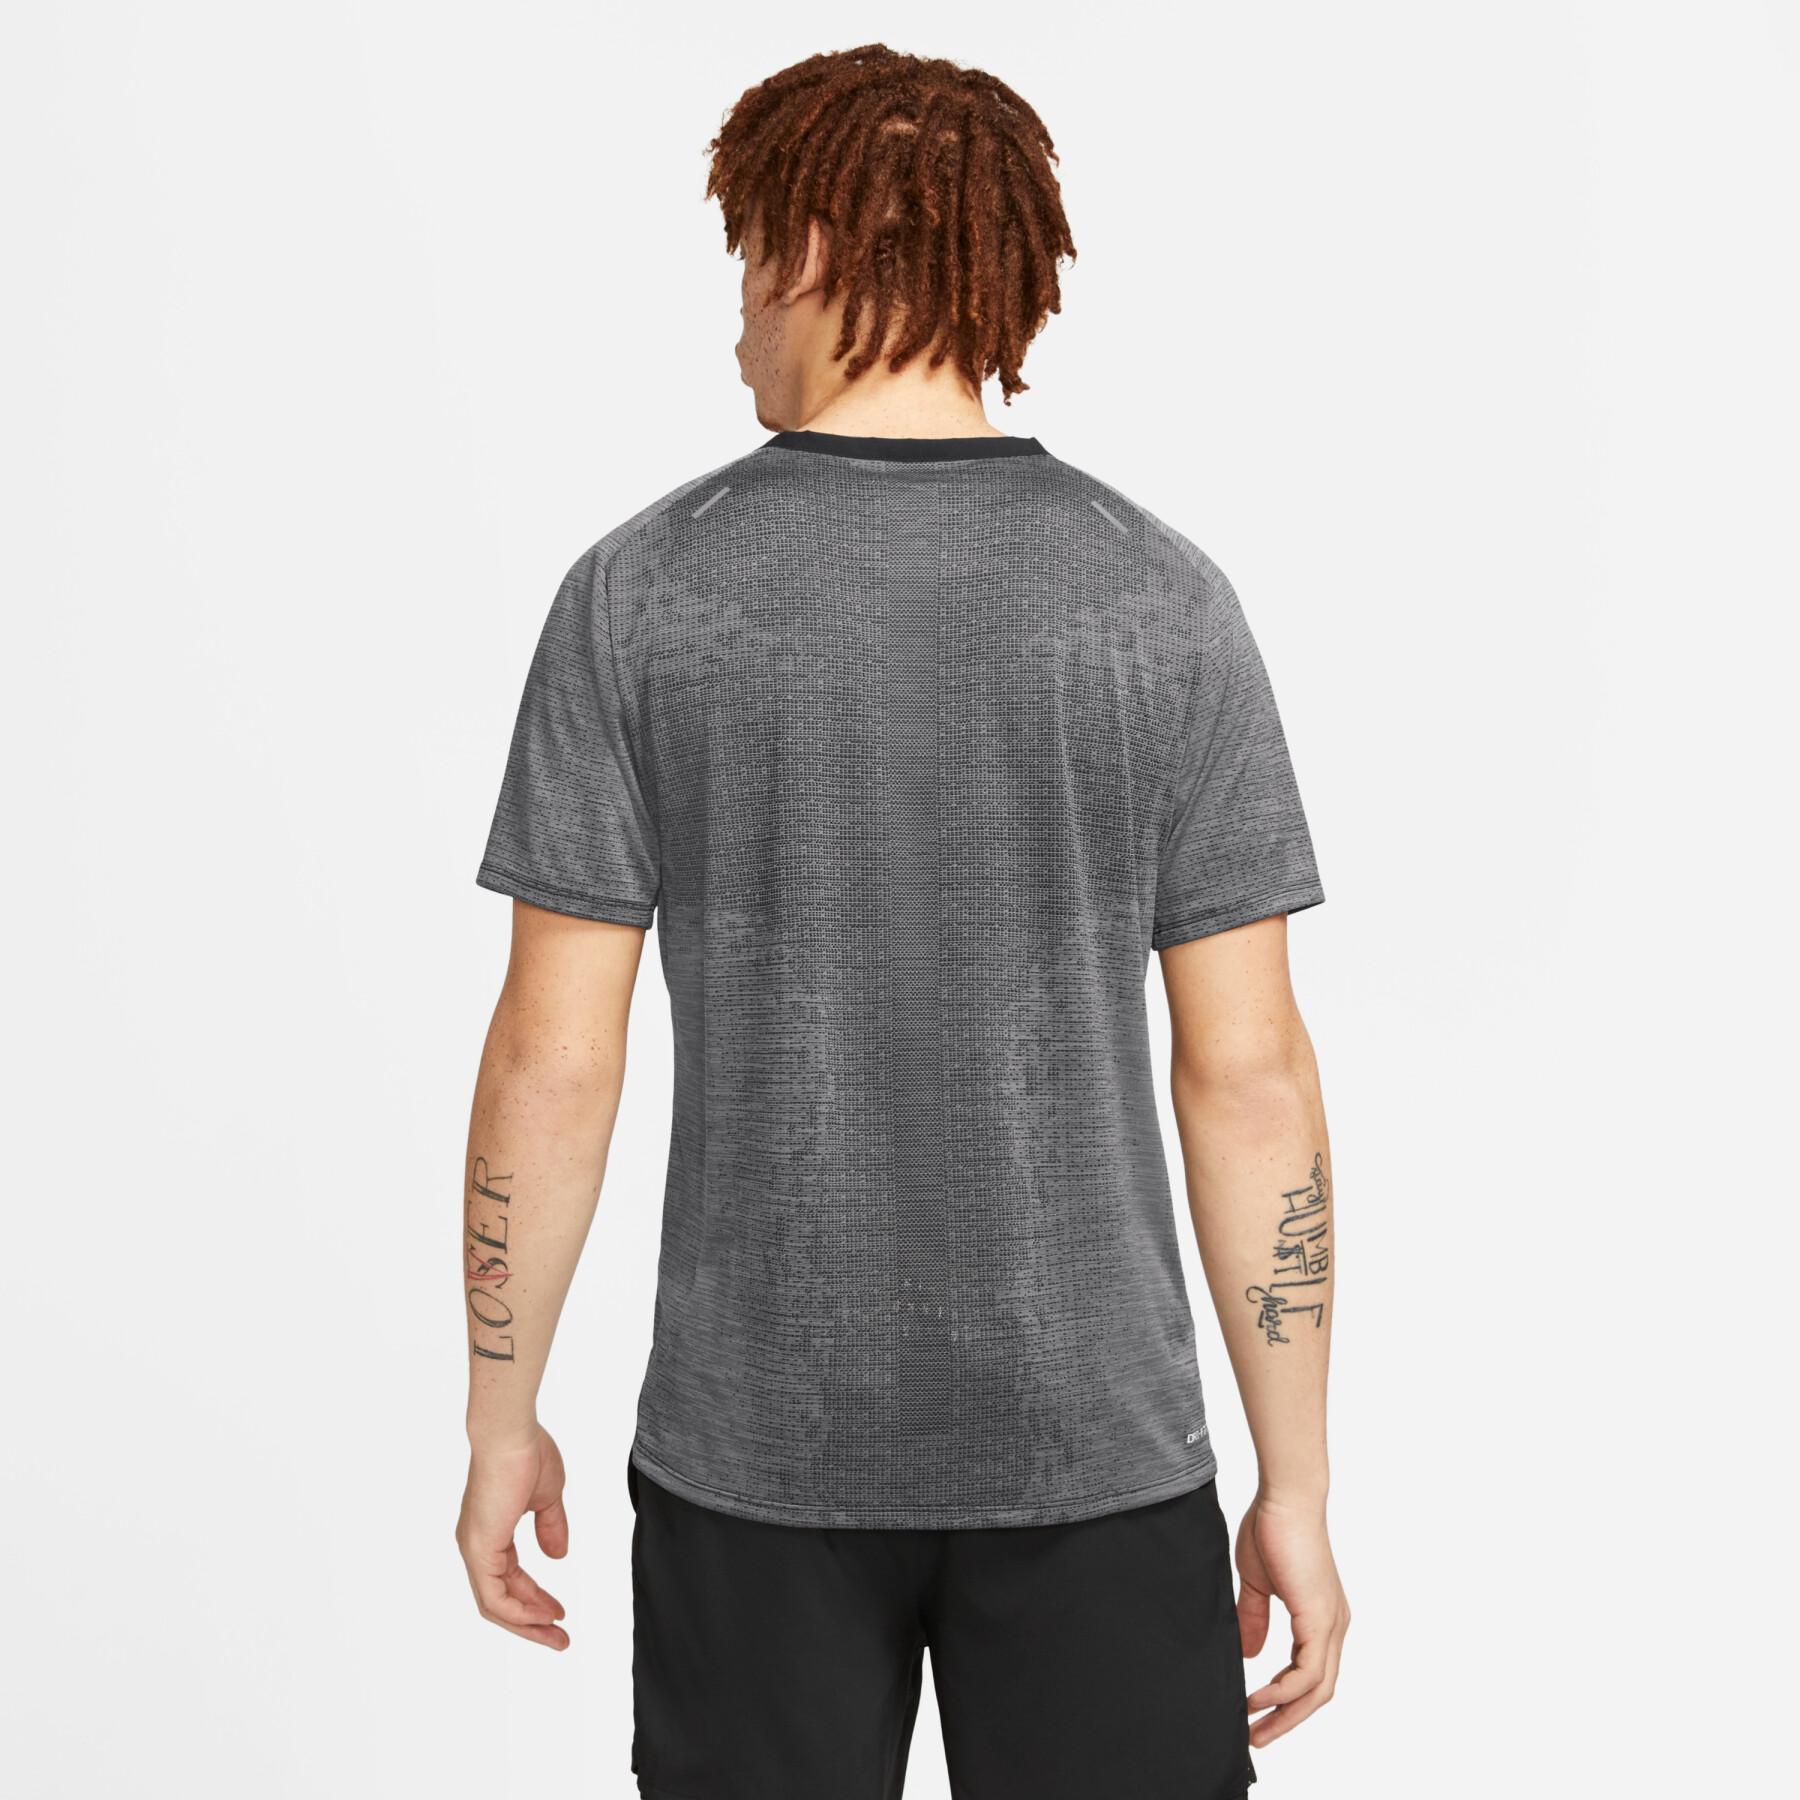 Koszulka Nike Techknit Ultra